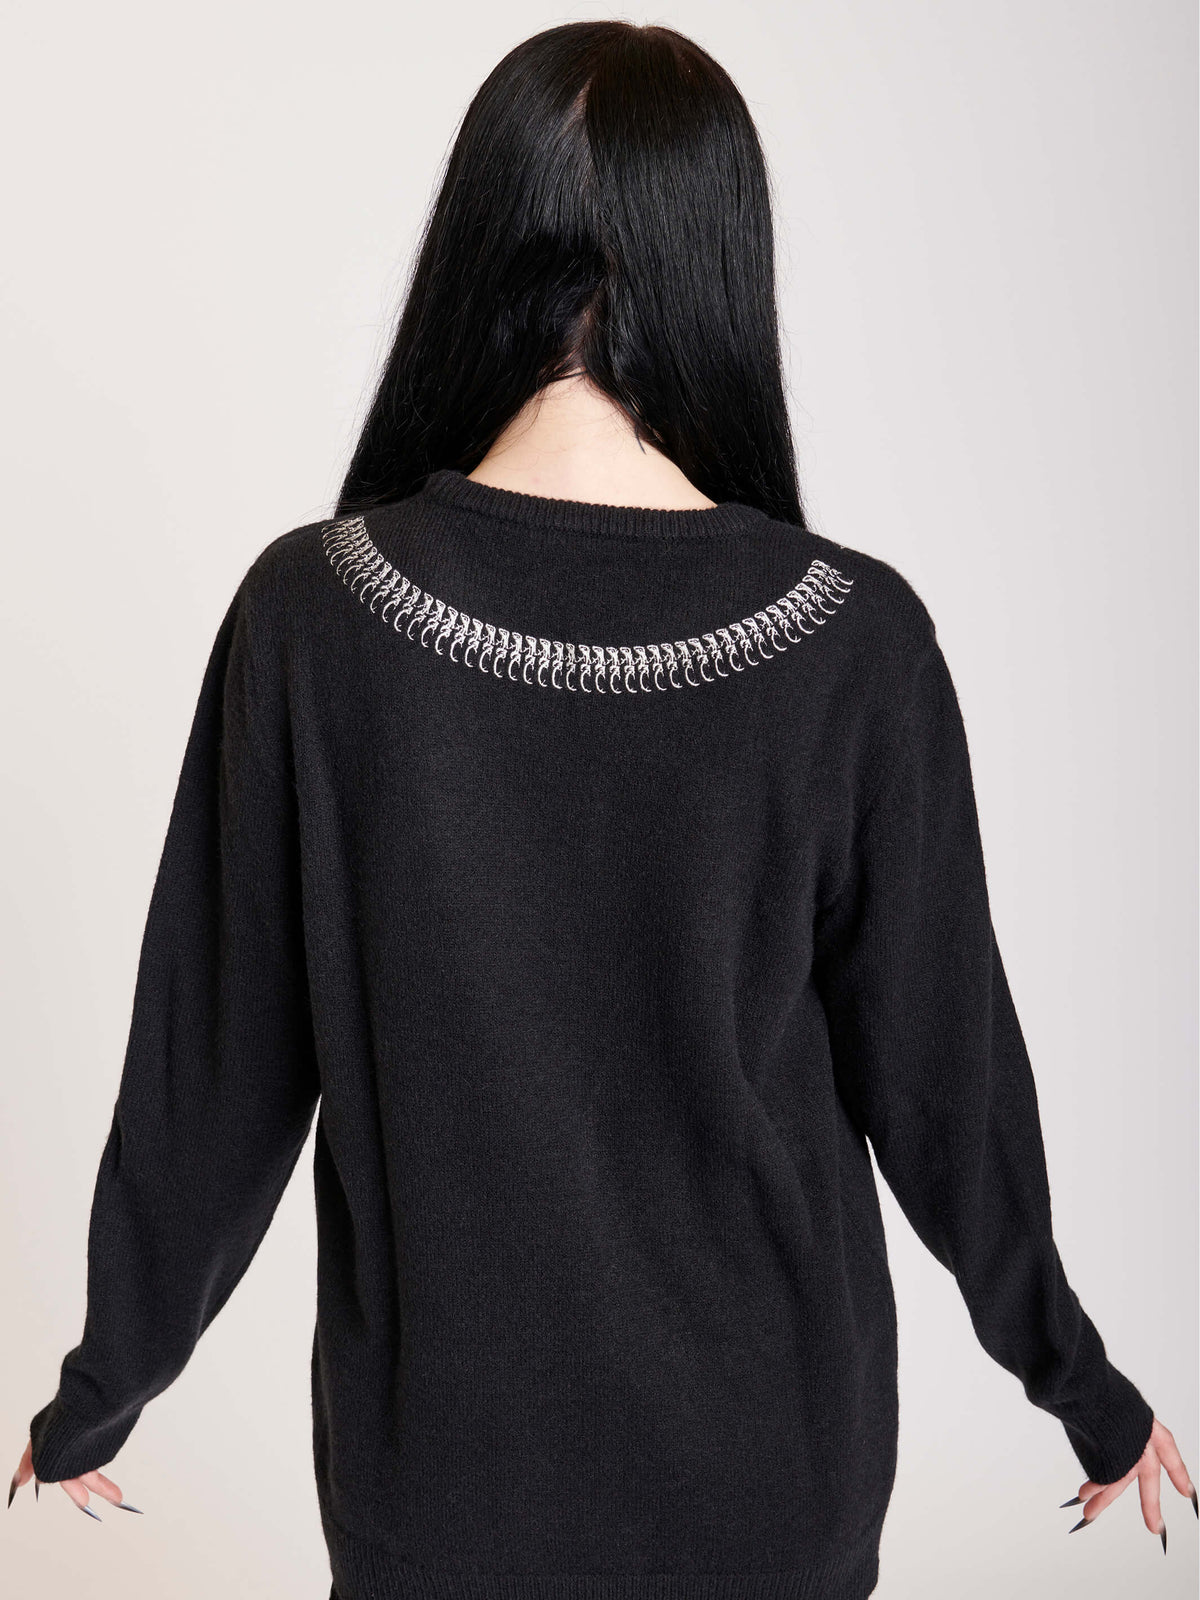 sweater with skeleton snake detail around neck.